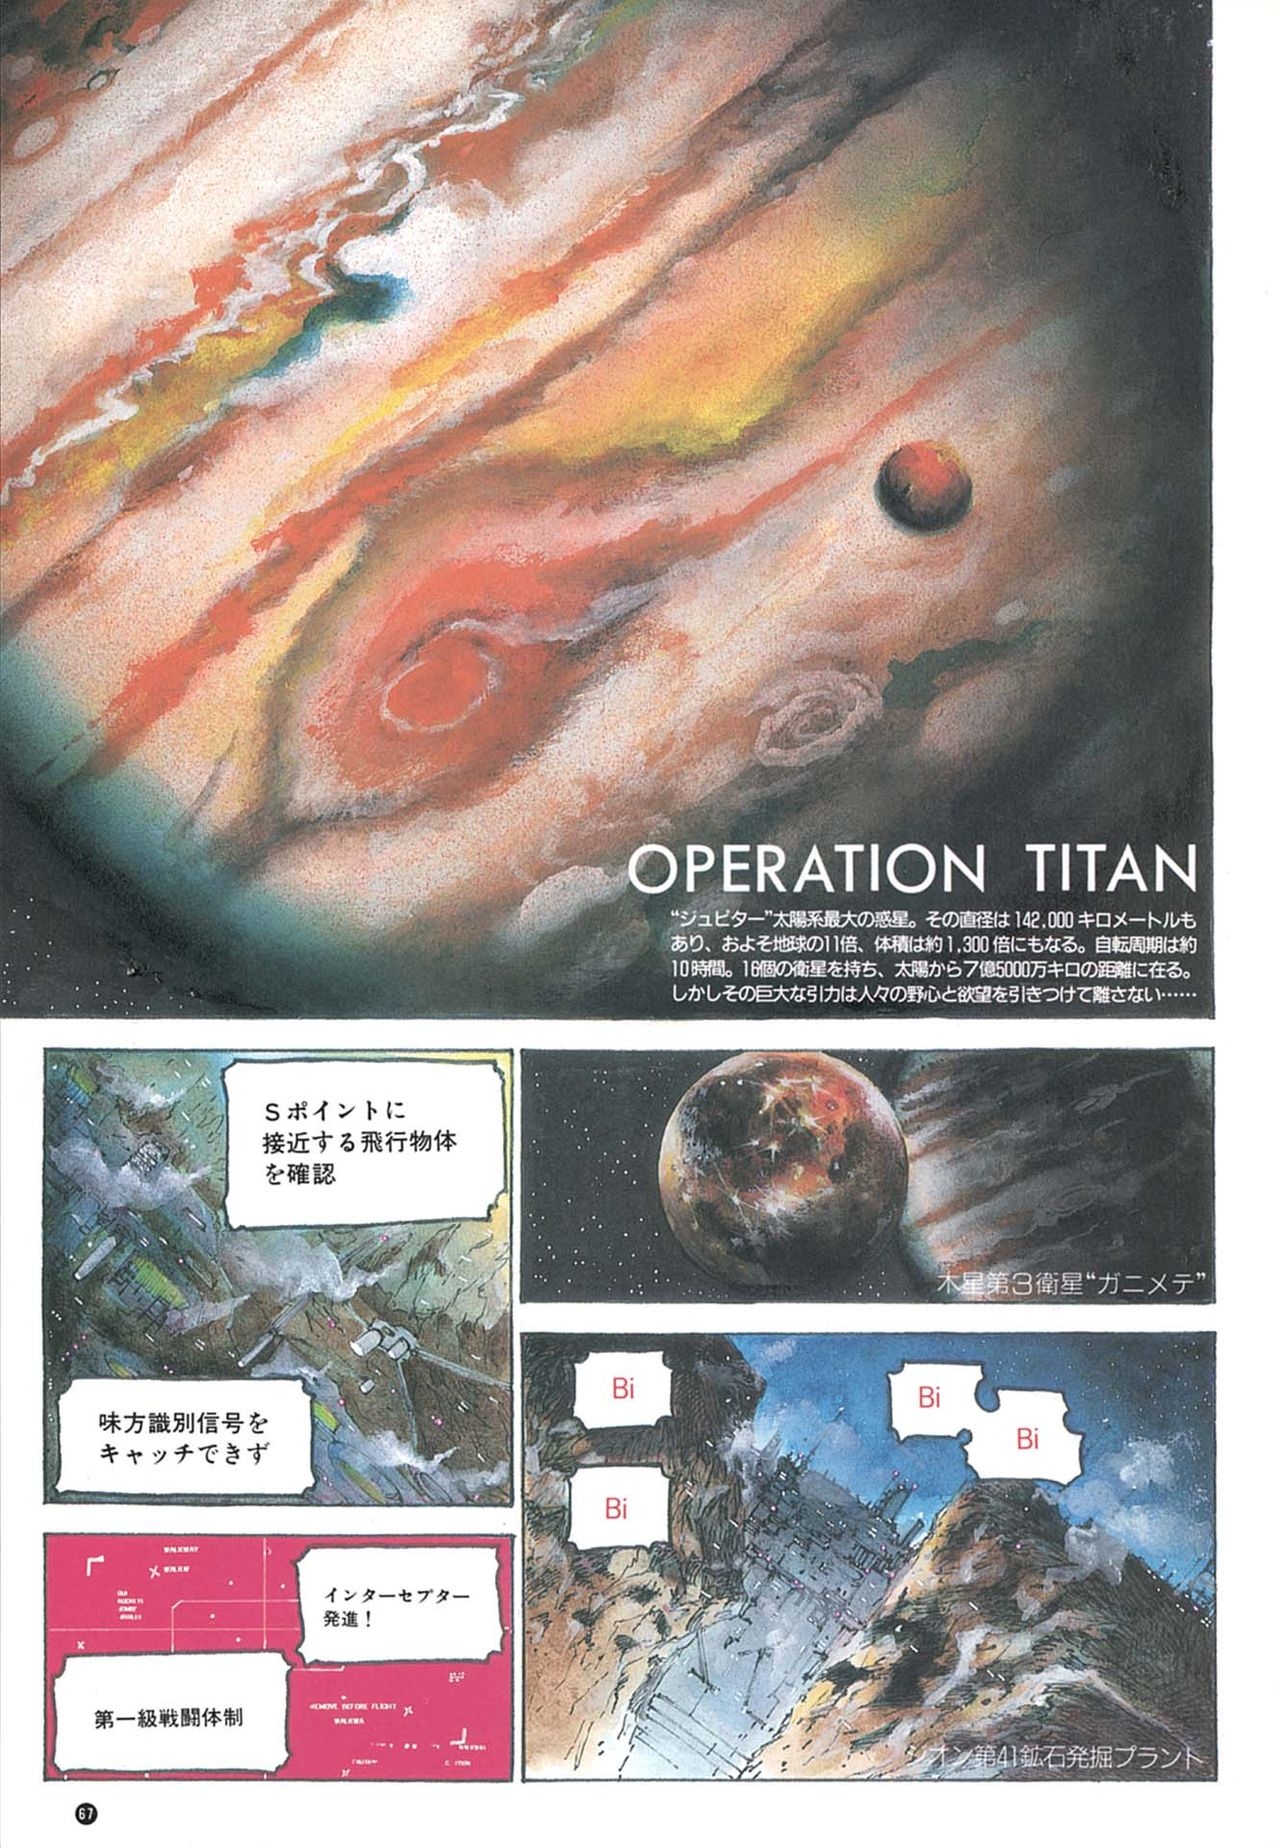 [Kazuhisa Kondo] Kazuhisa Kondo 2D & 3D Works - Go Ahead - From Mobile Suit Gundam to Original Mechanism 66